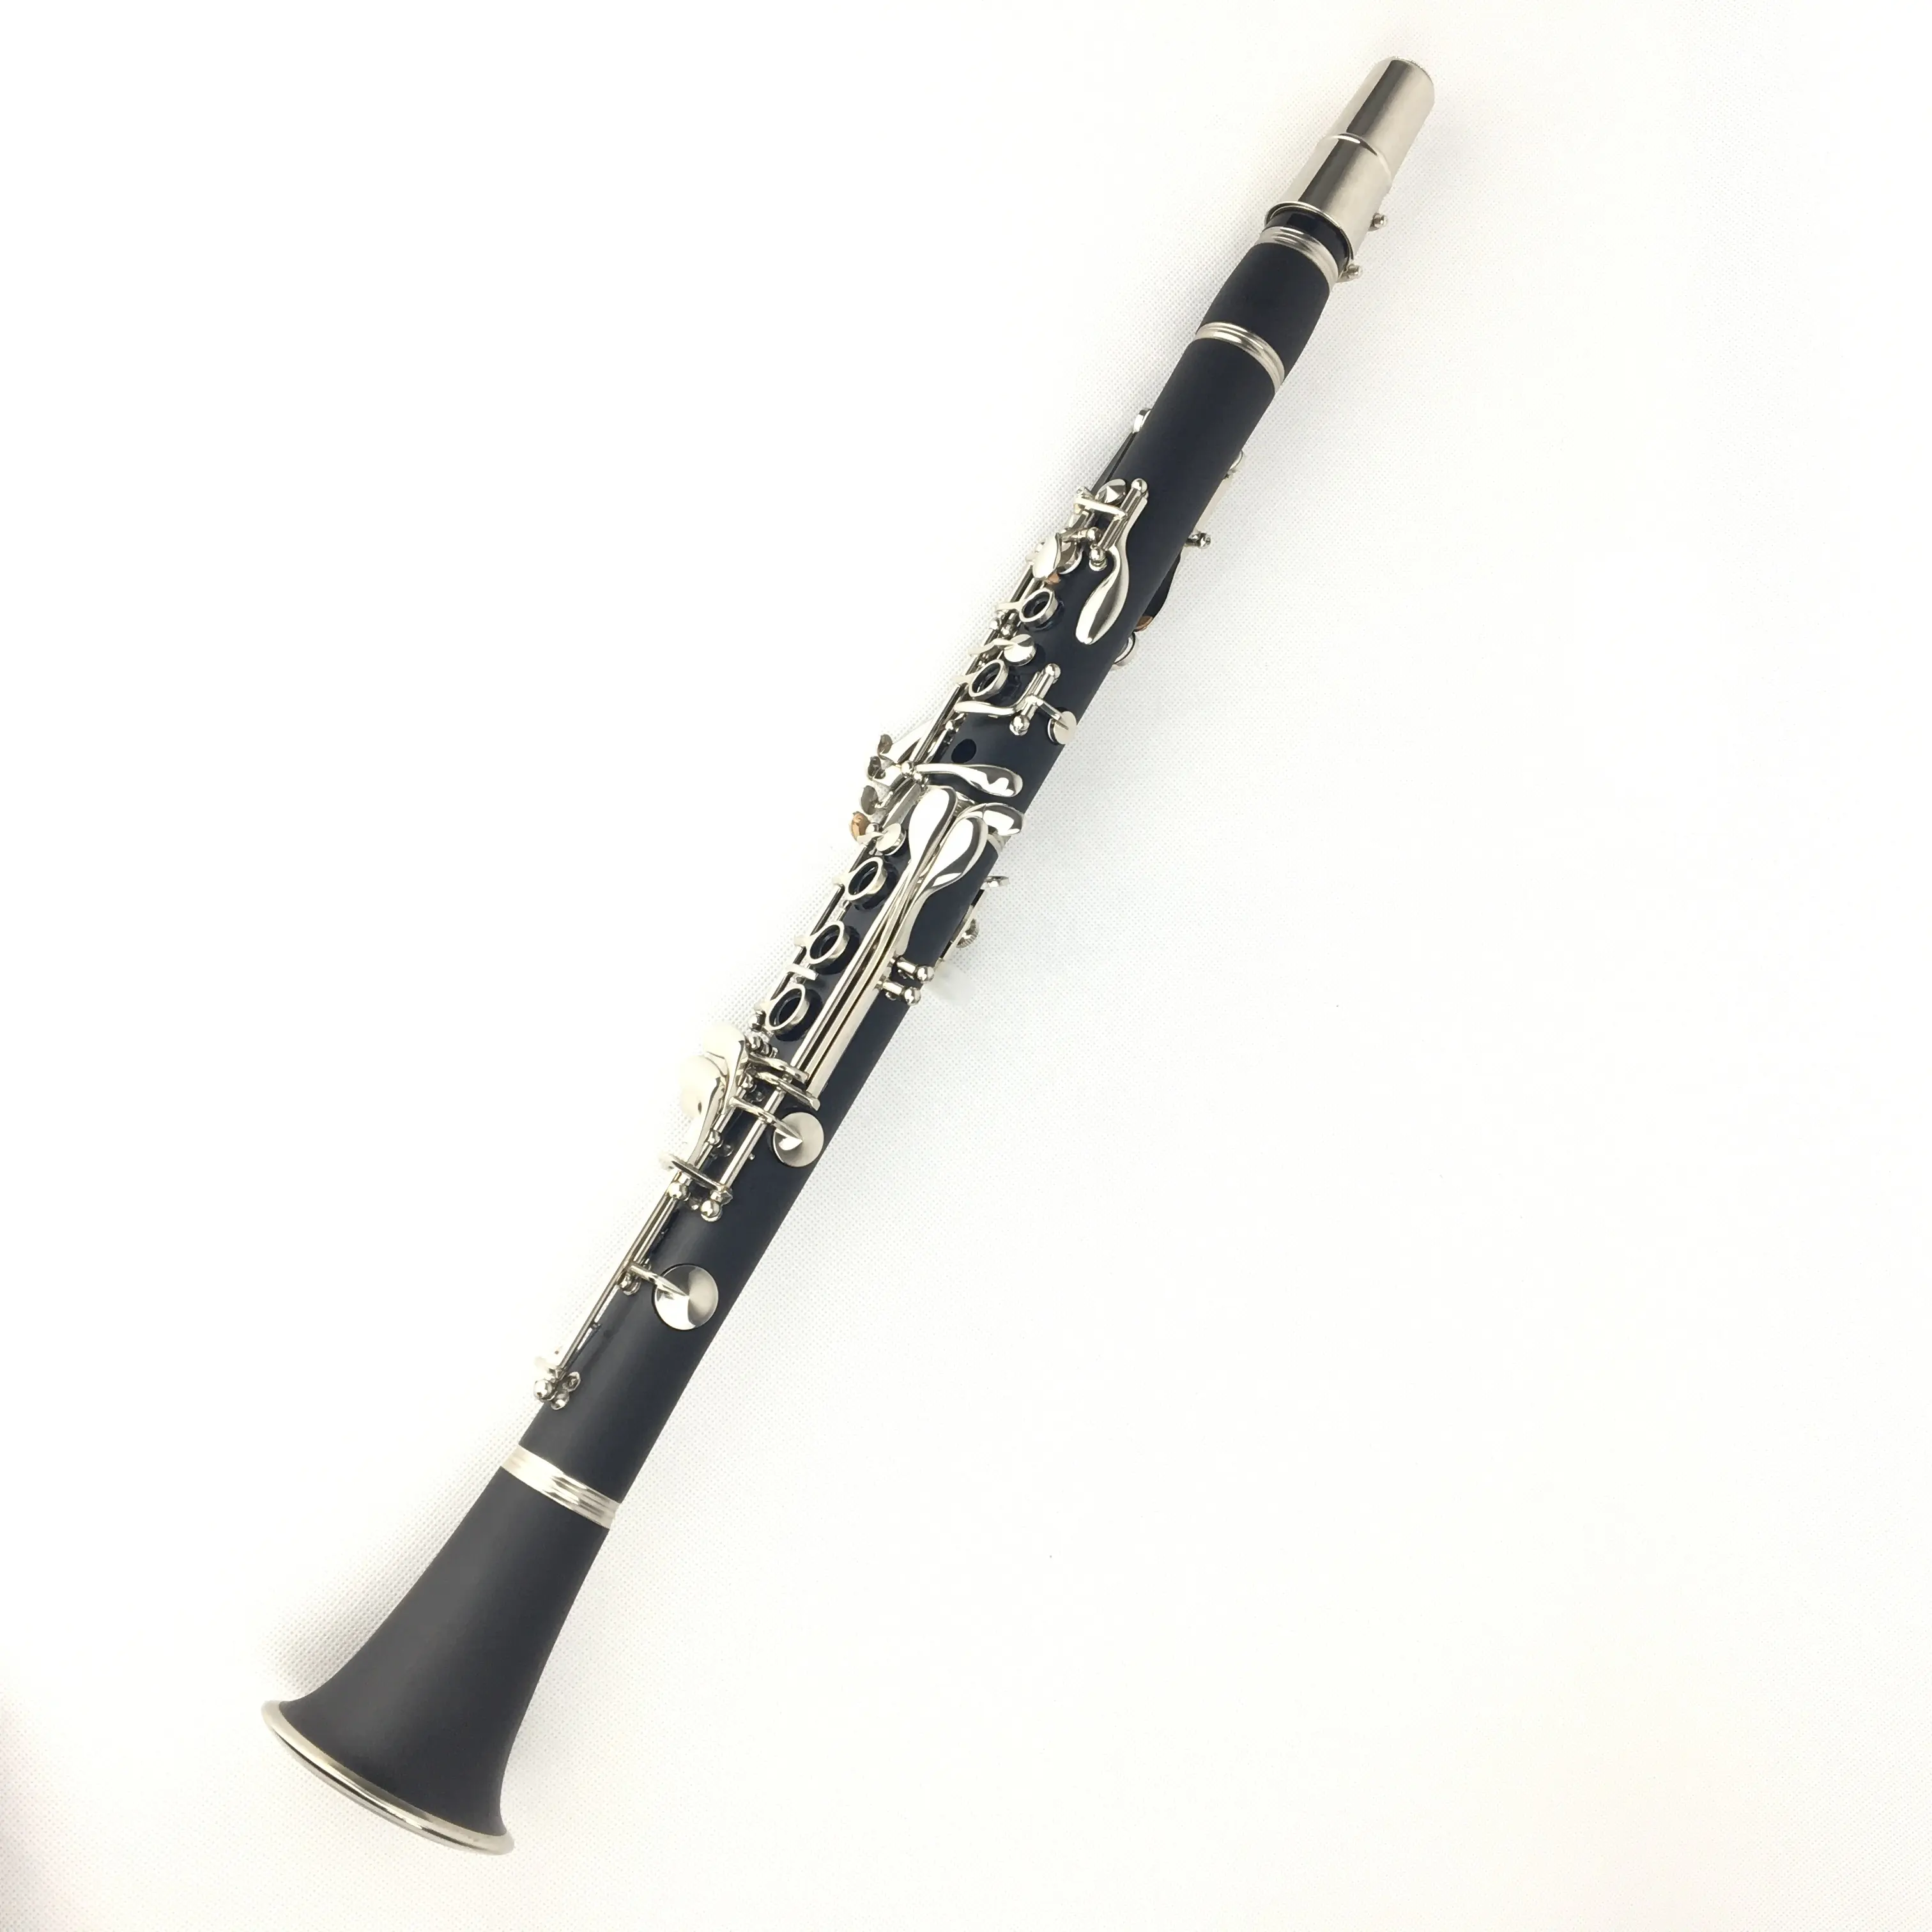 Professional clarinet free logo wood instrument Clarinet hard rubber body nickel plate c tone Clarinet